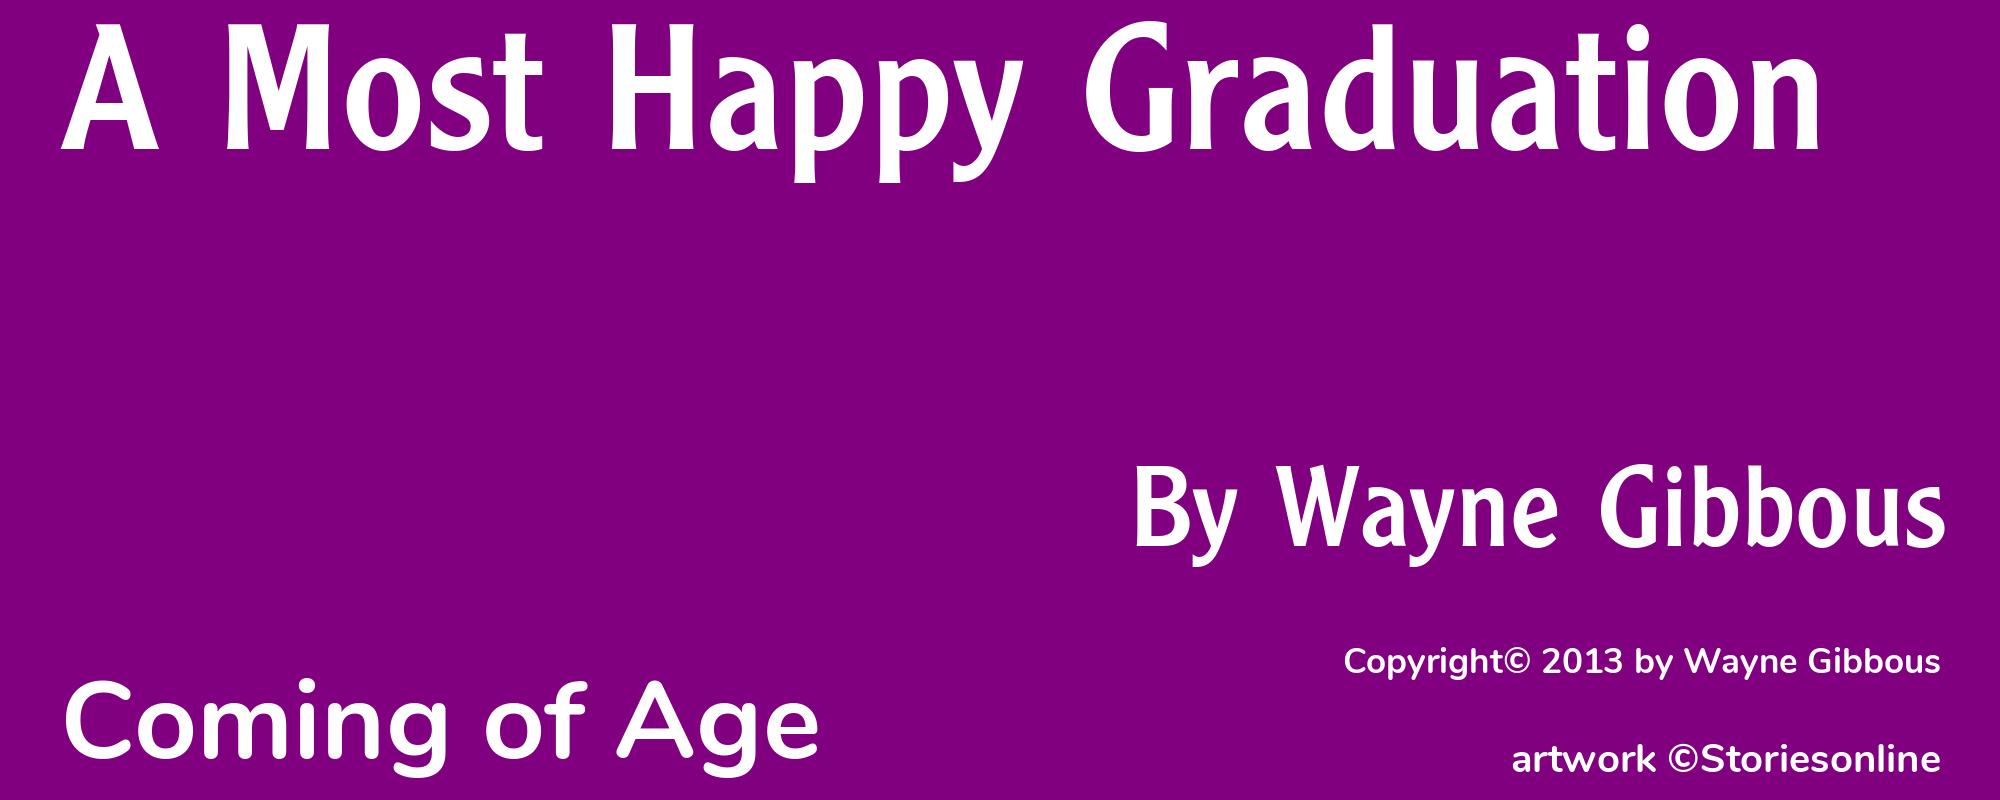 A Most Happy Graduation - Cover